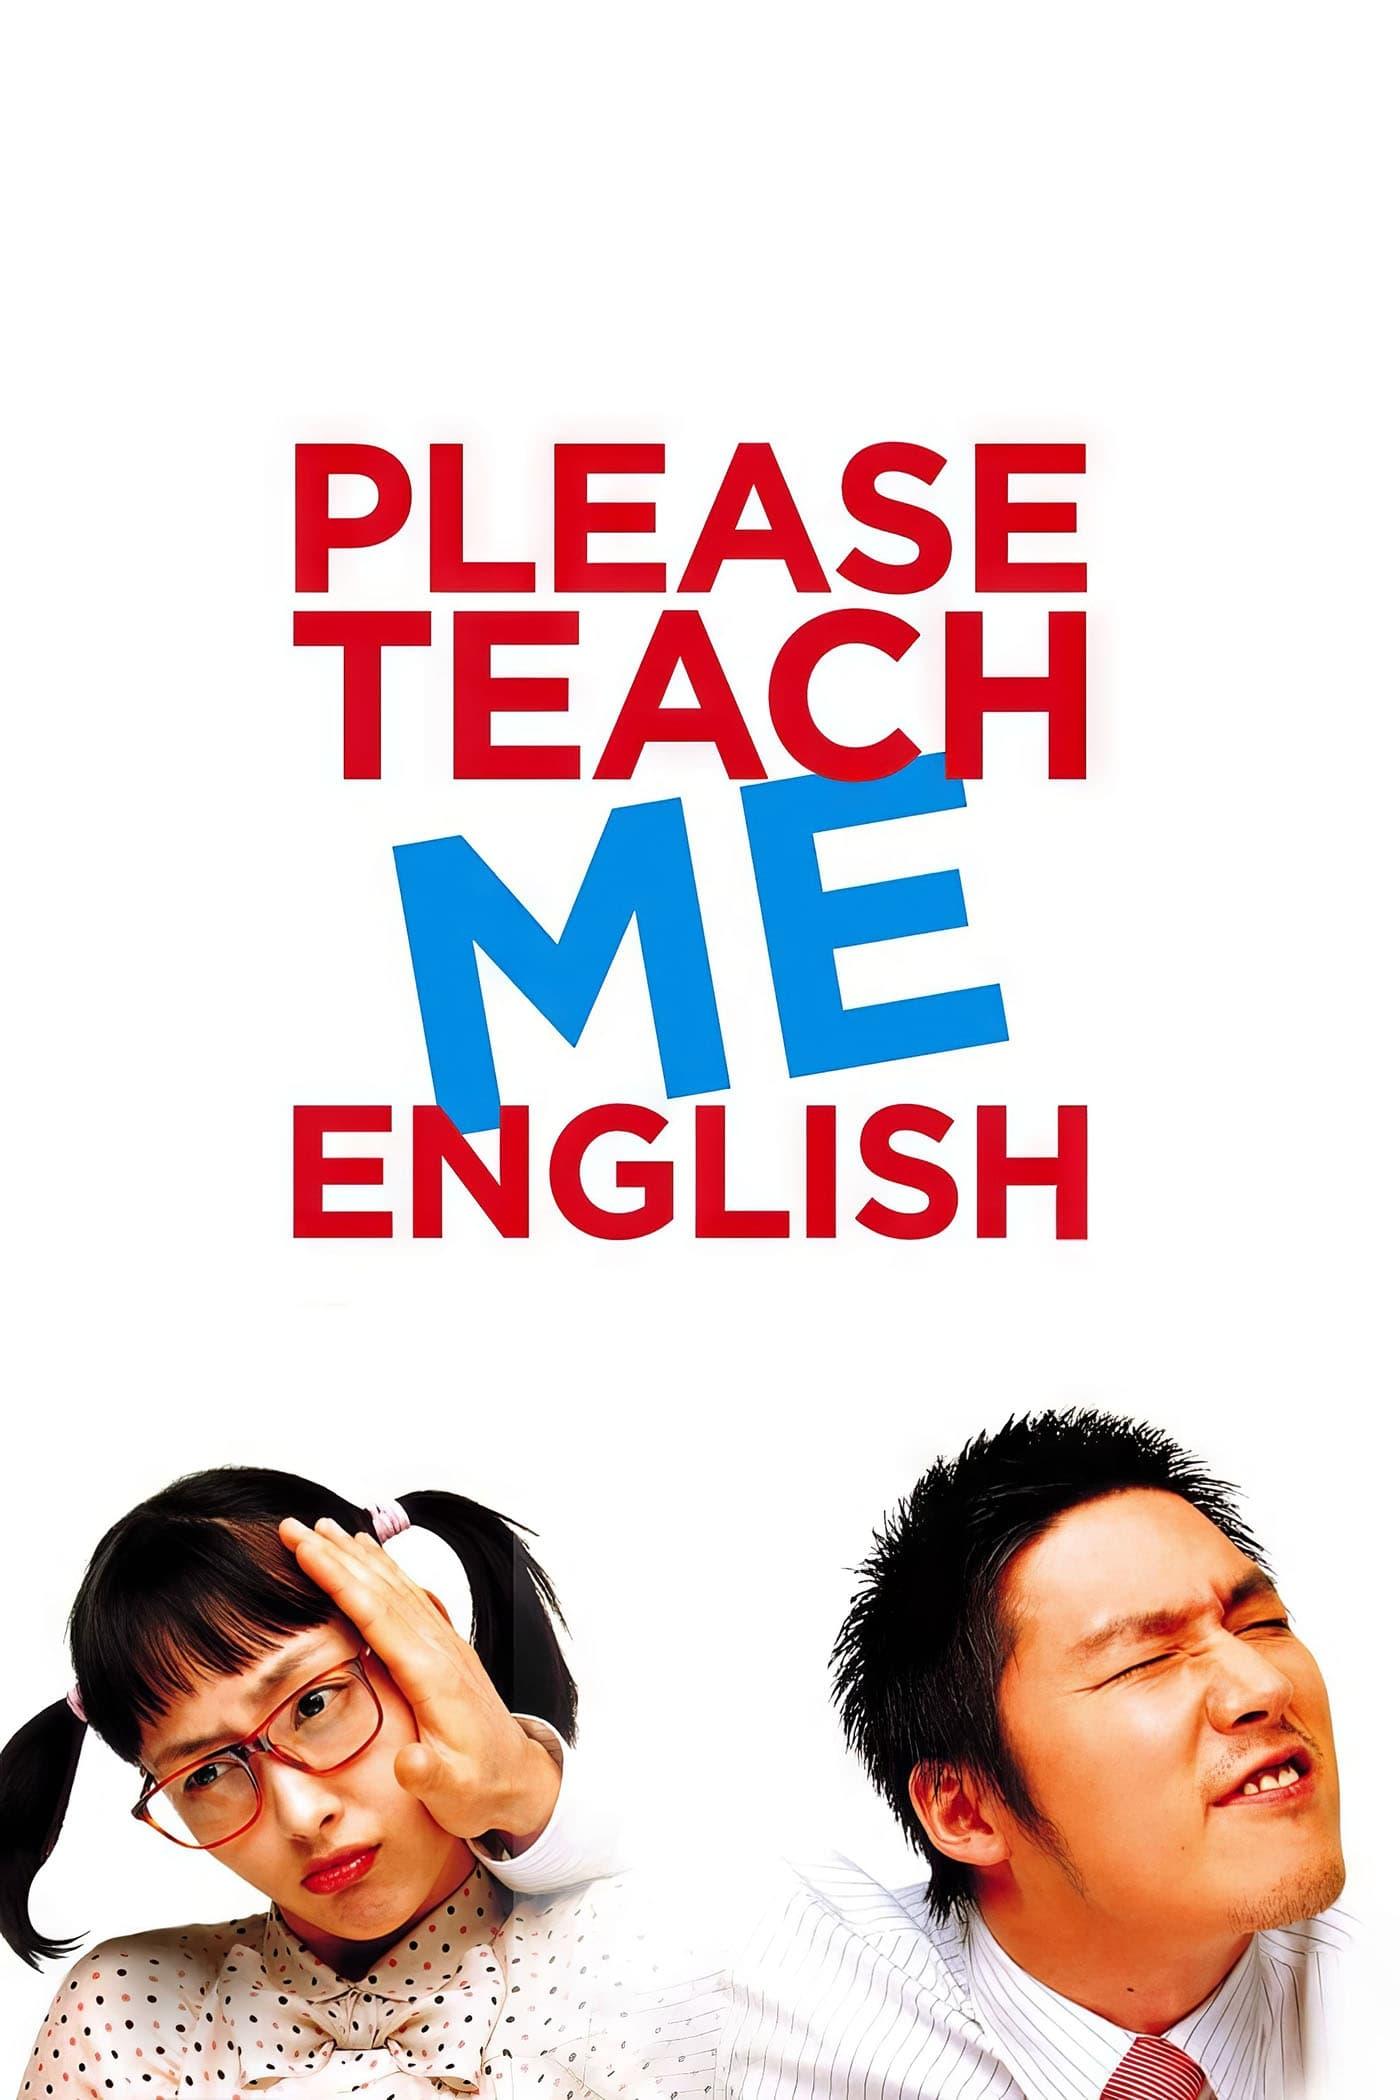 Please Teach Me English poster